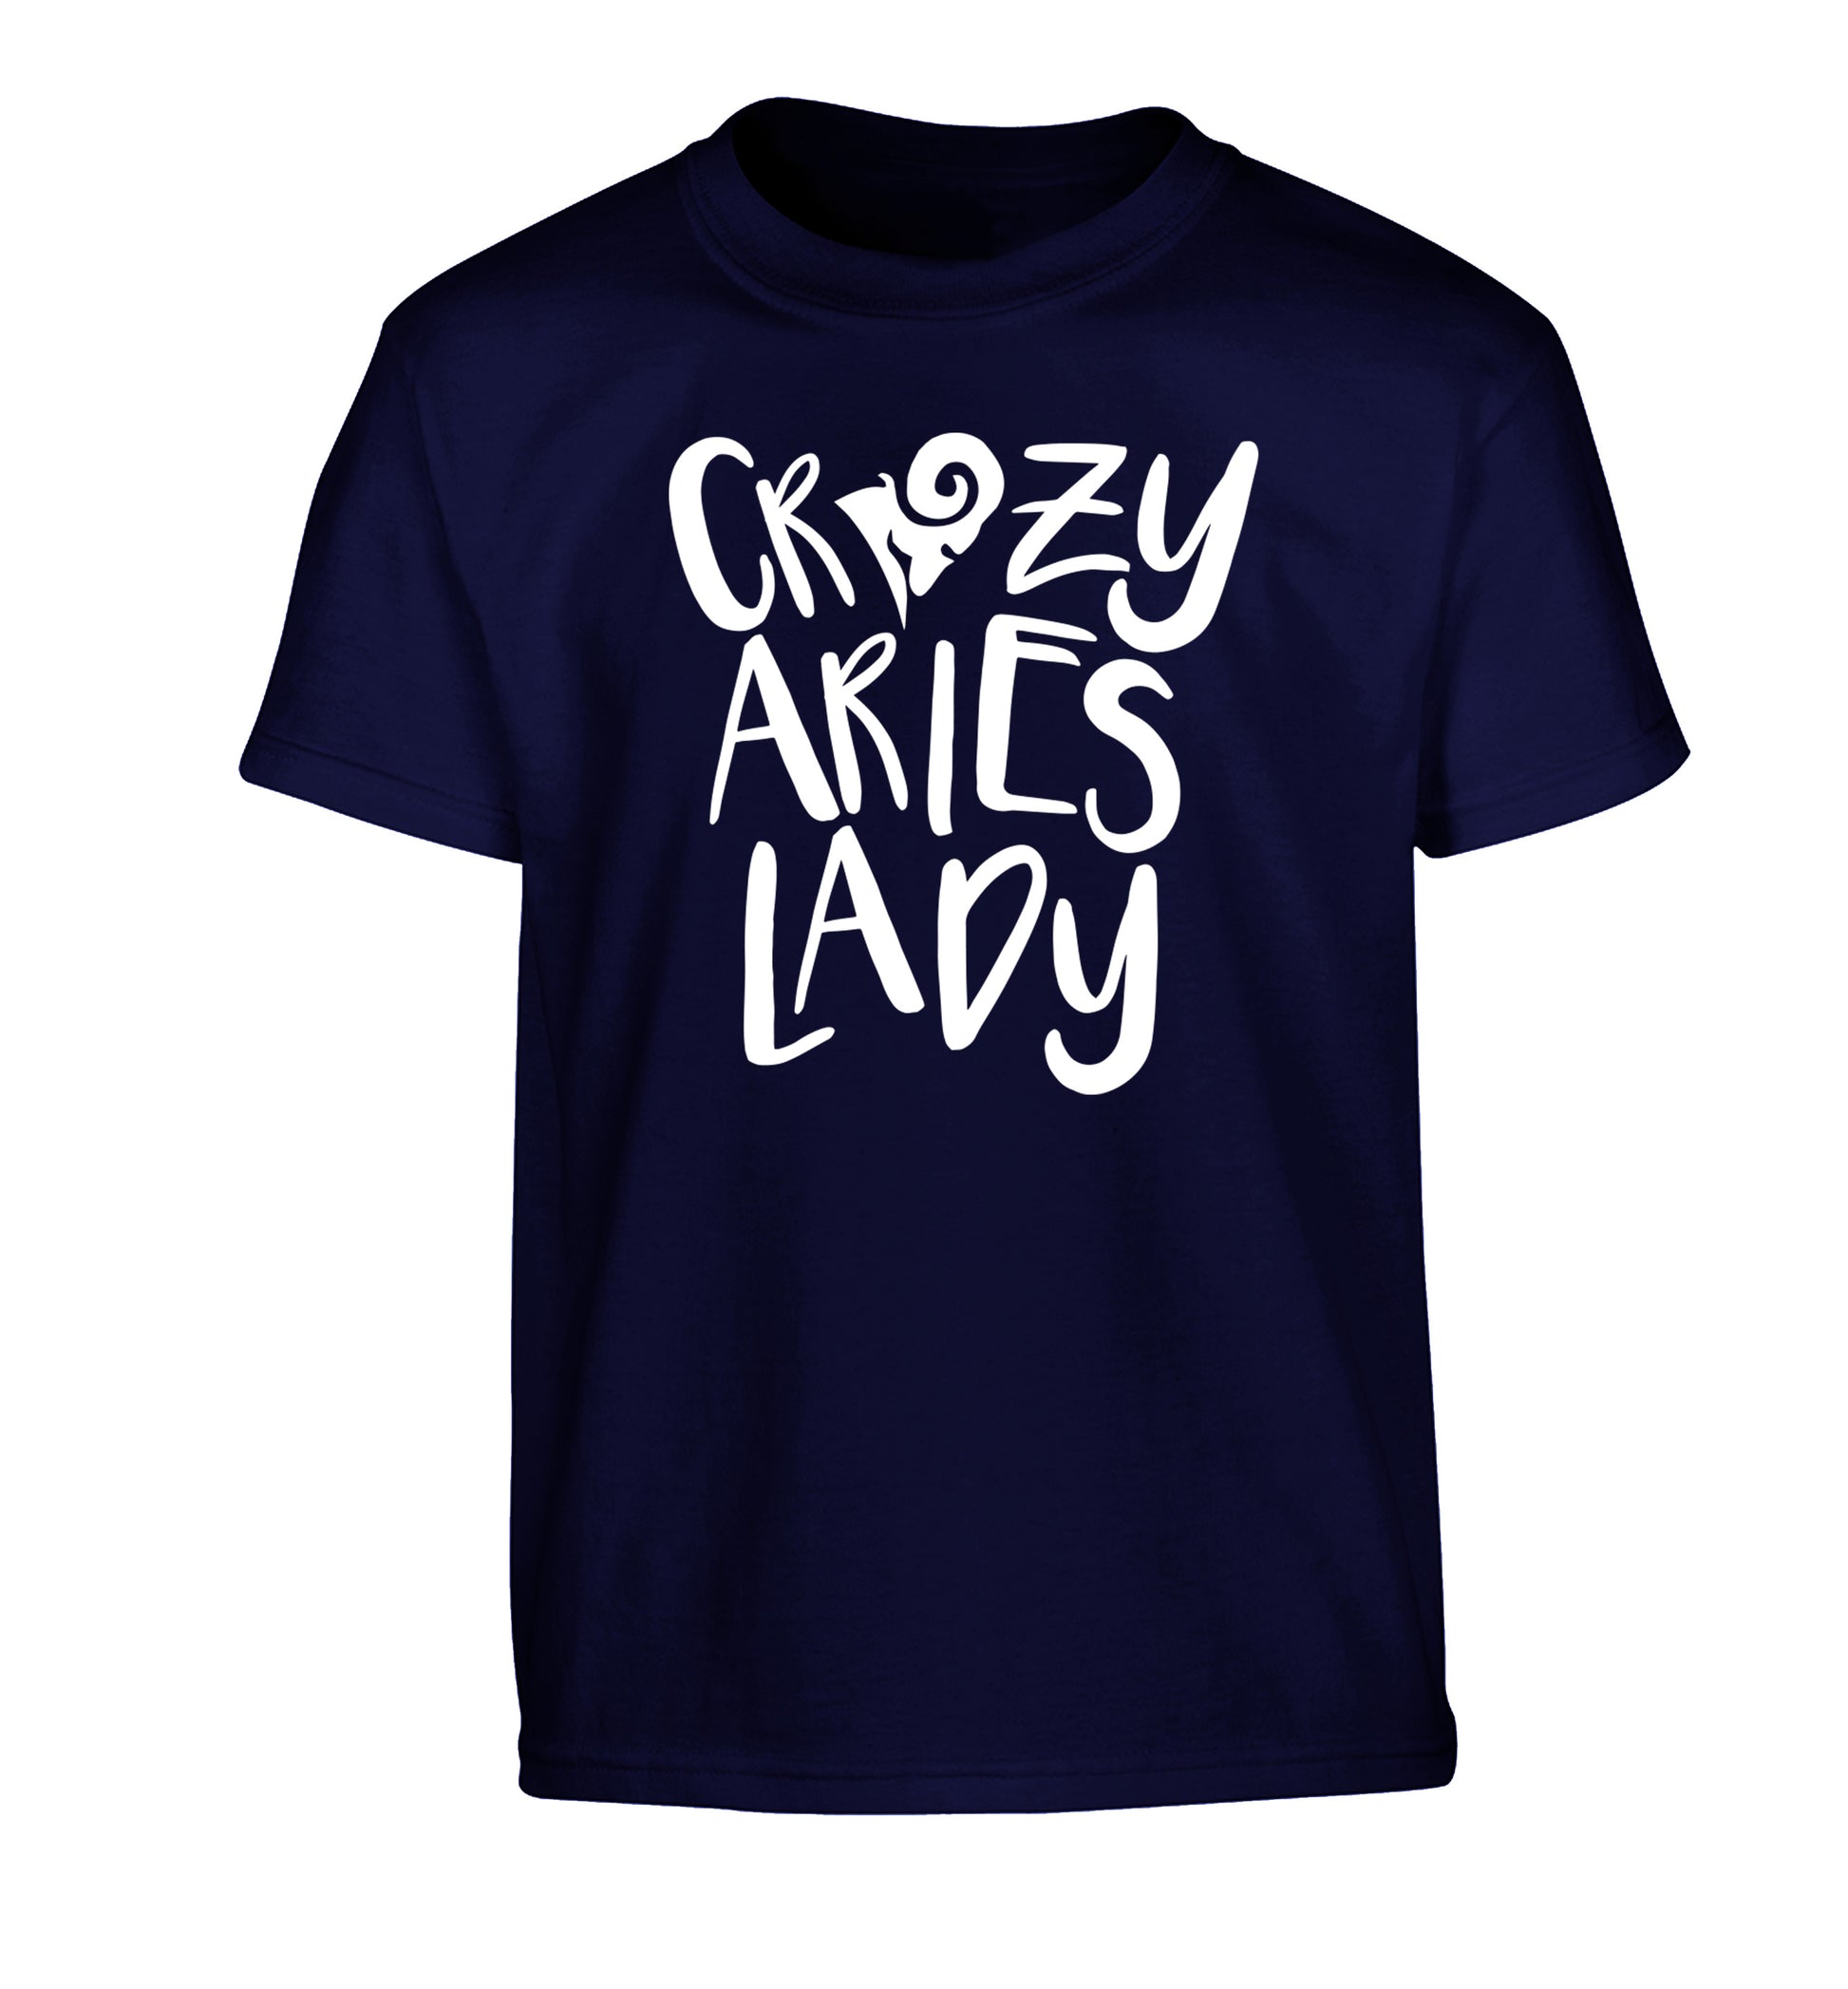 Crazy aries lady Children's navy Tshirt 12-13 Years